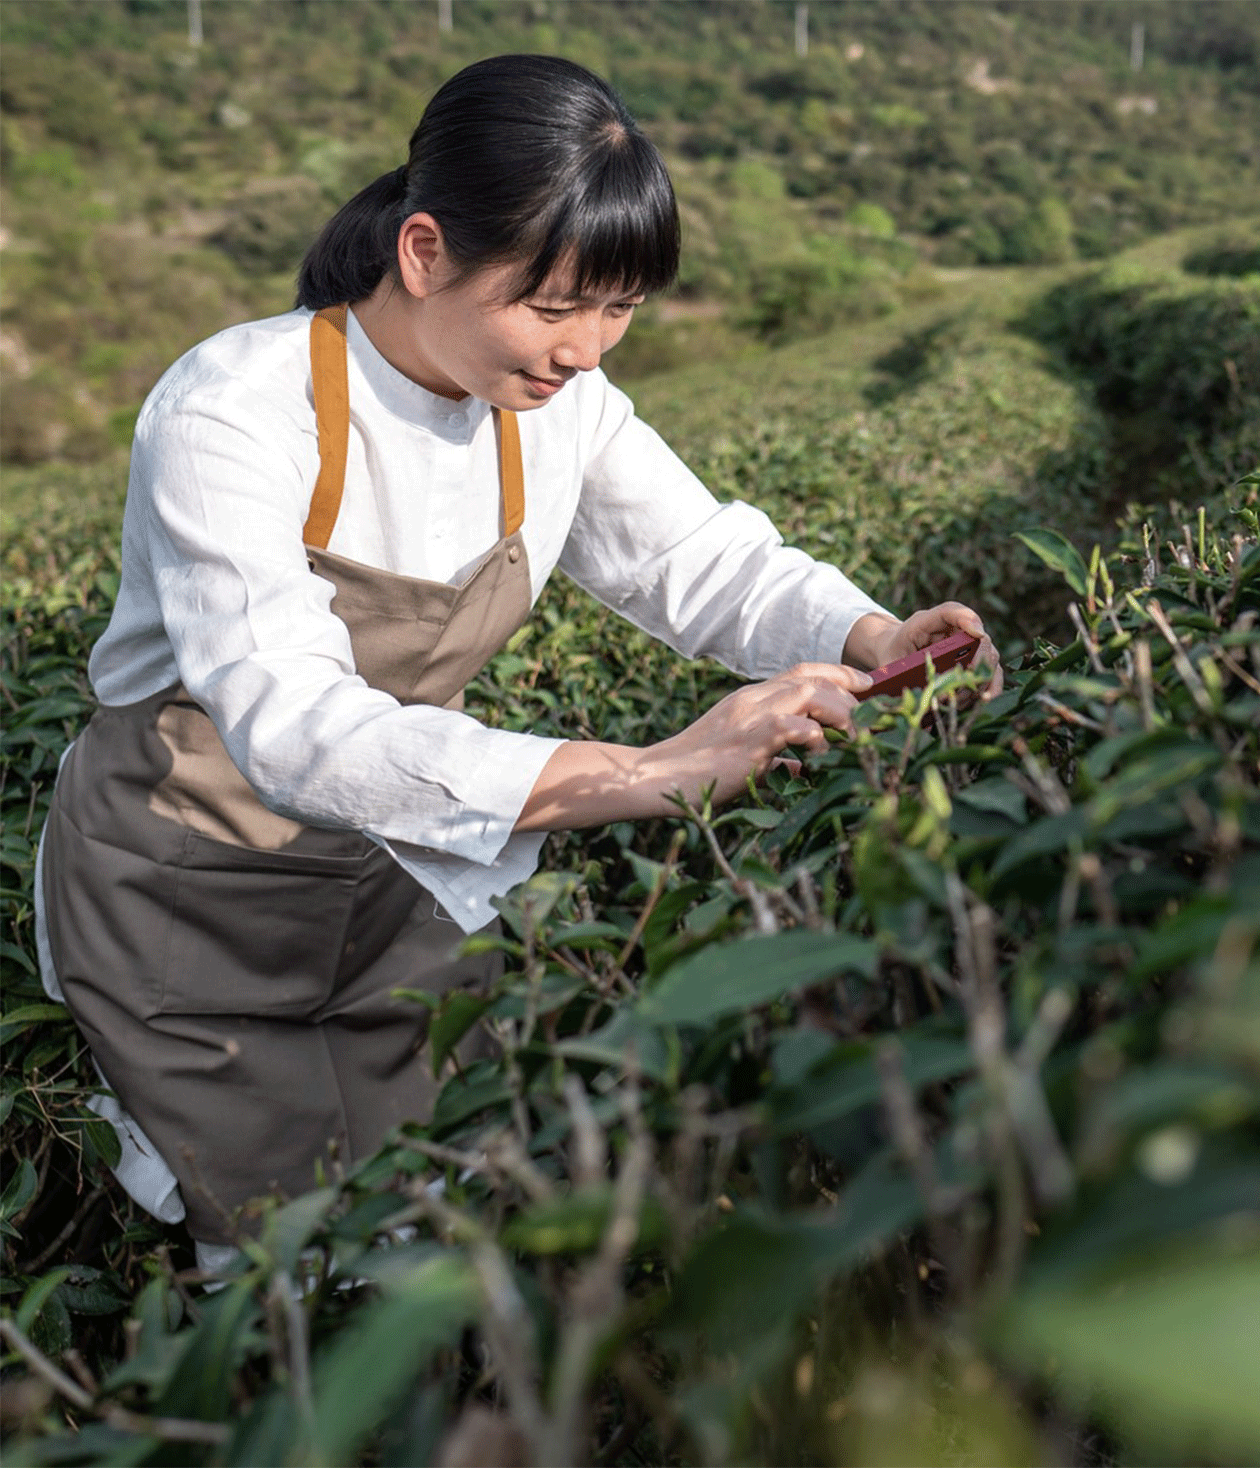 Tea Craft: Growing the Tea Bush